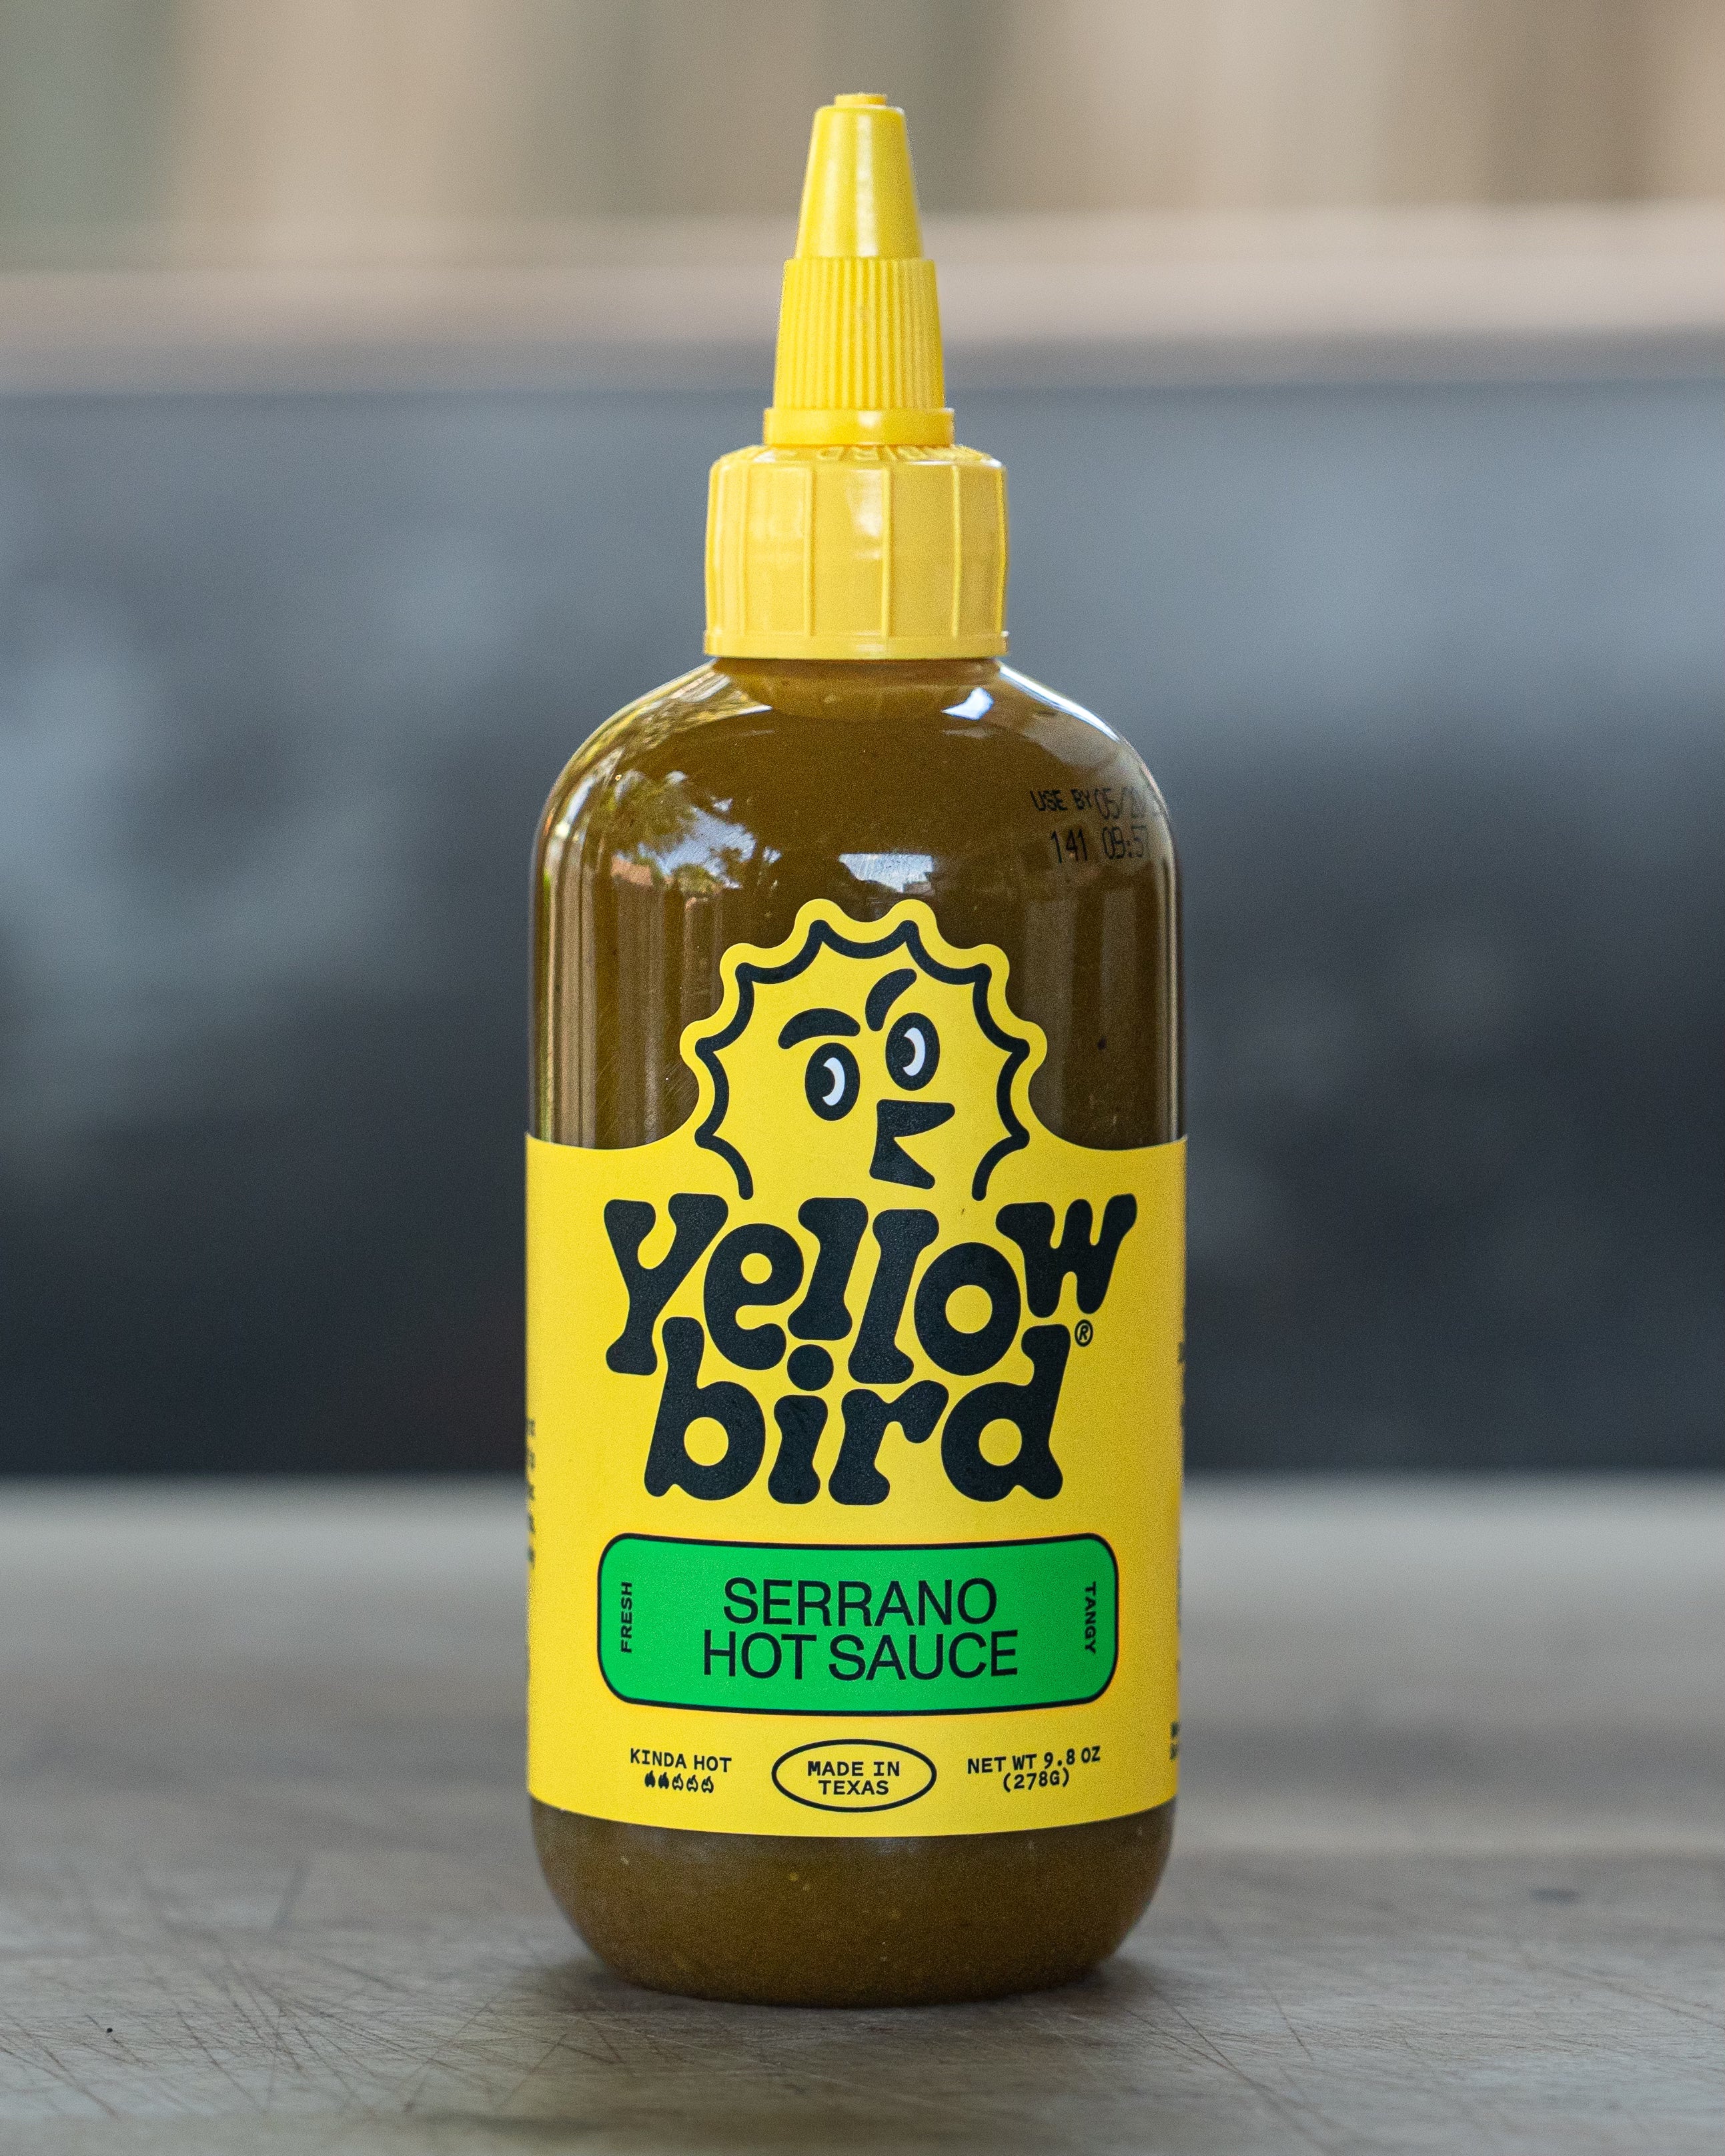 Yellowbird Serrano Hot Sauce